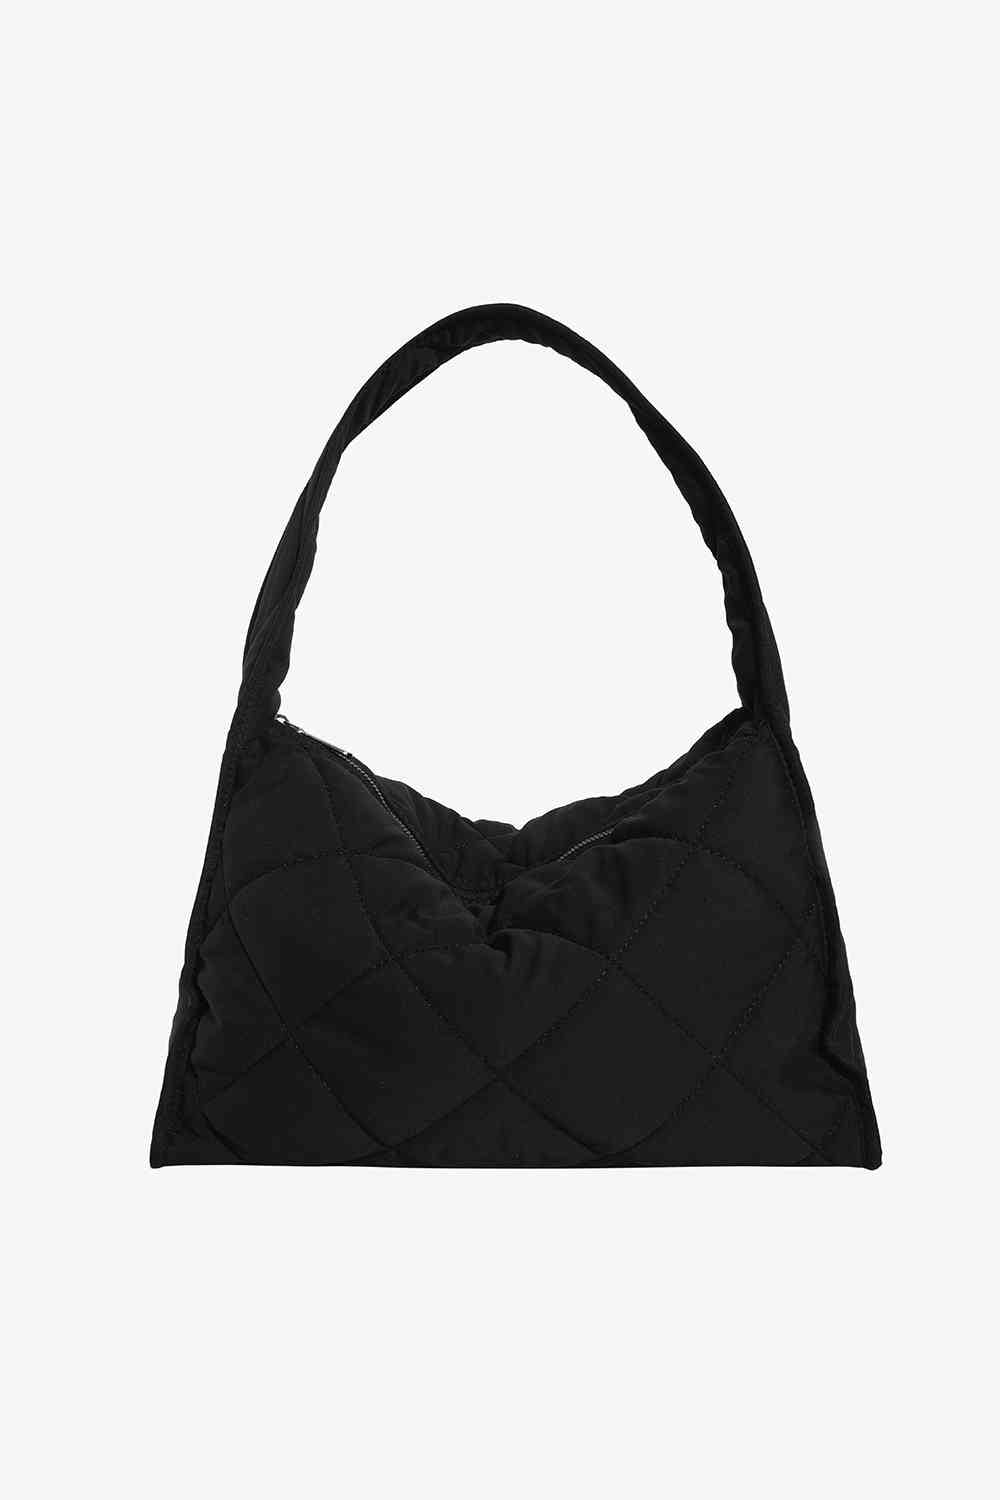 Nylon Shoulder Bag - Black / One Size - All Products - Handbags - 9 - 2024